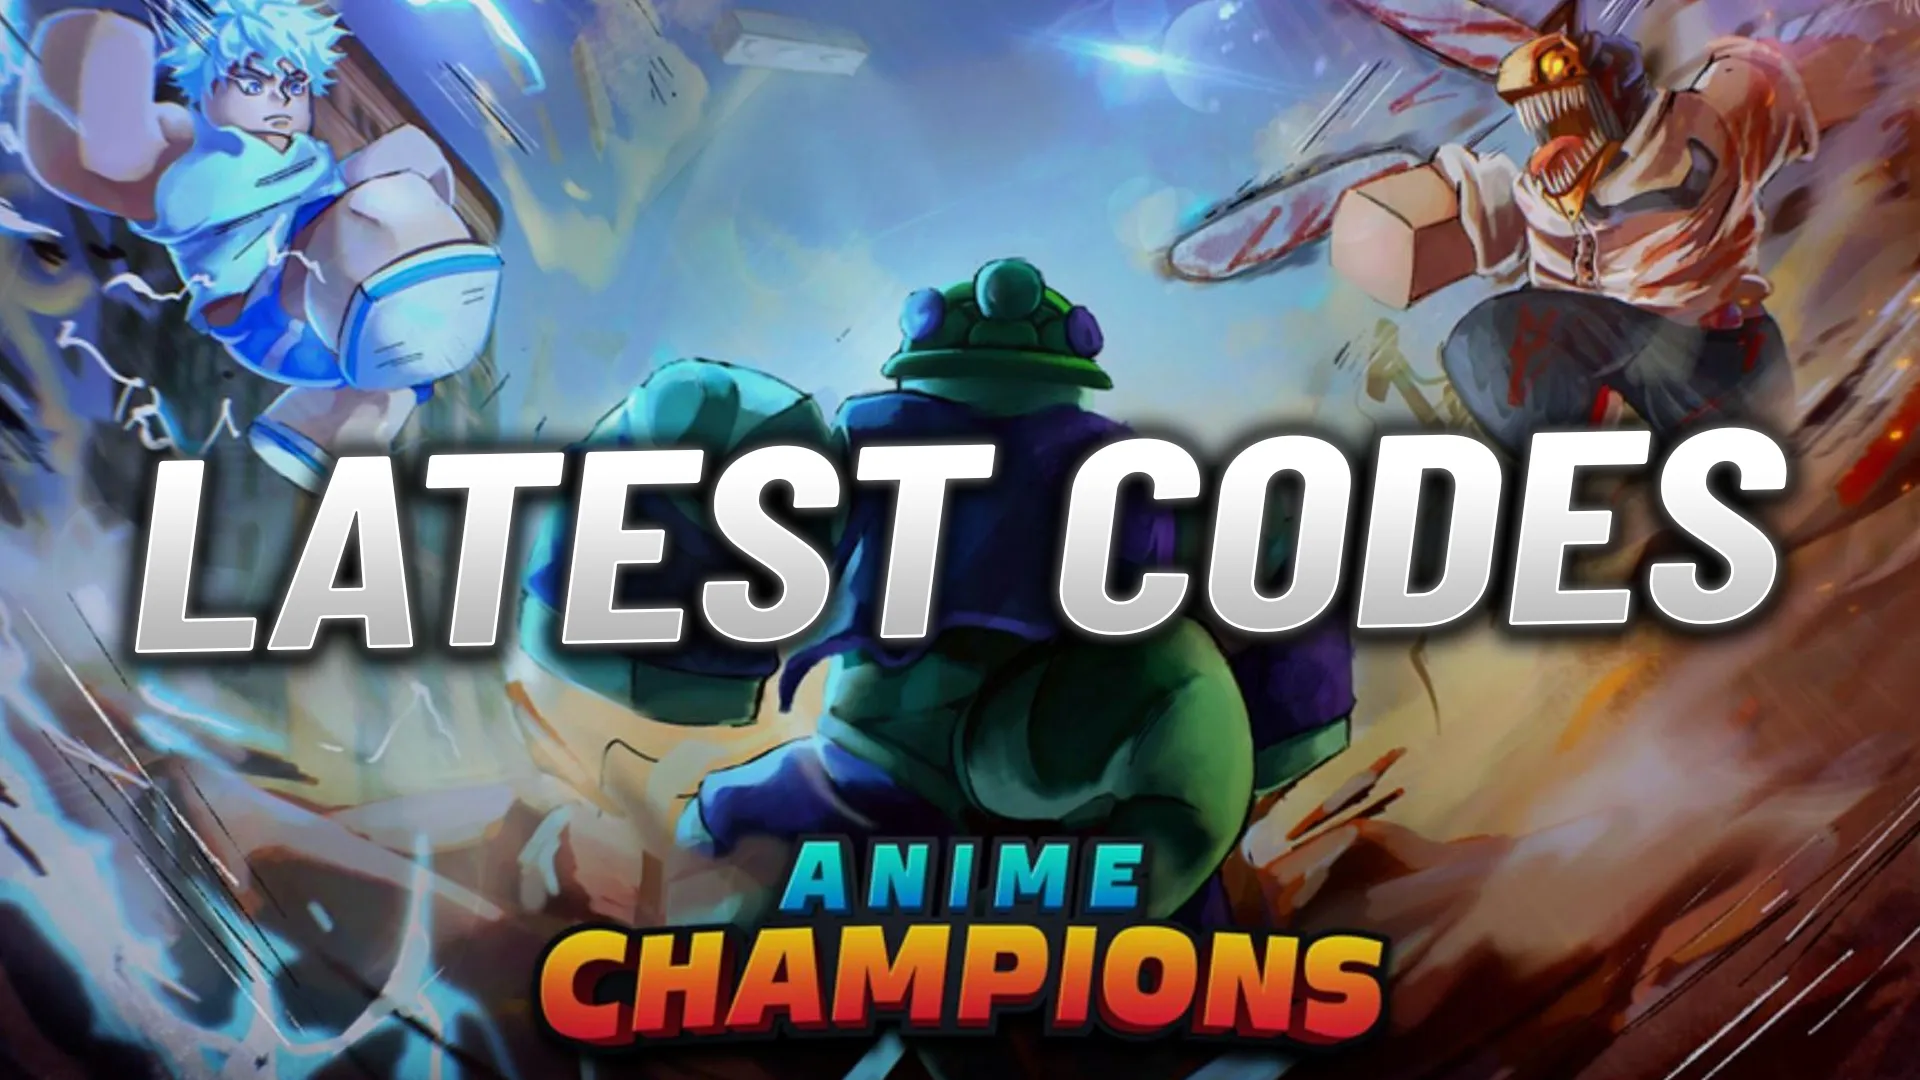 Roblox: Anime Champions Simulator Codes